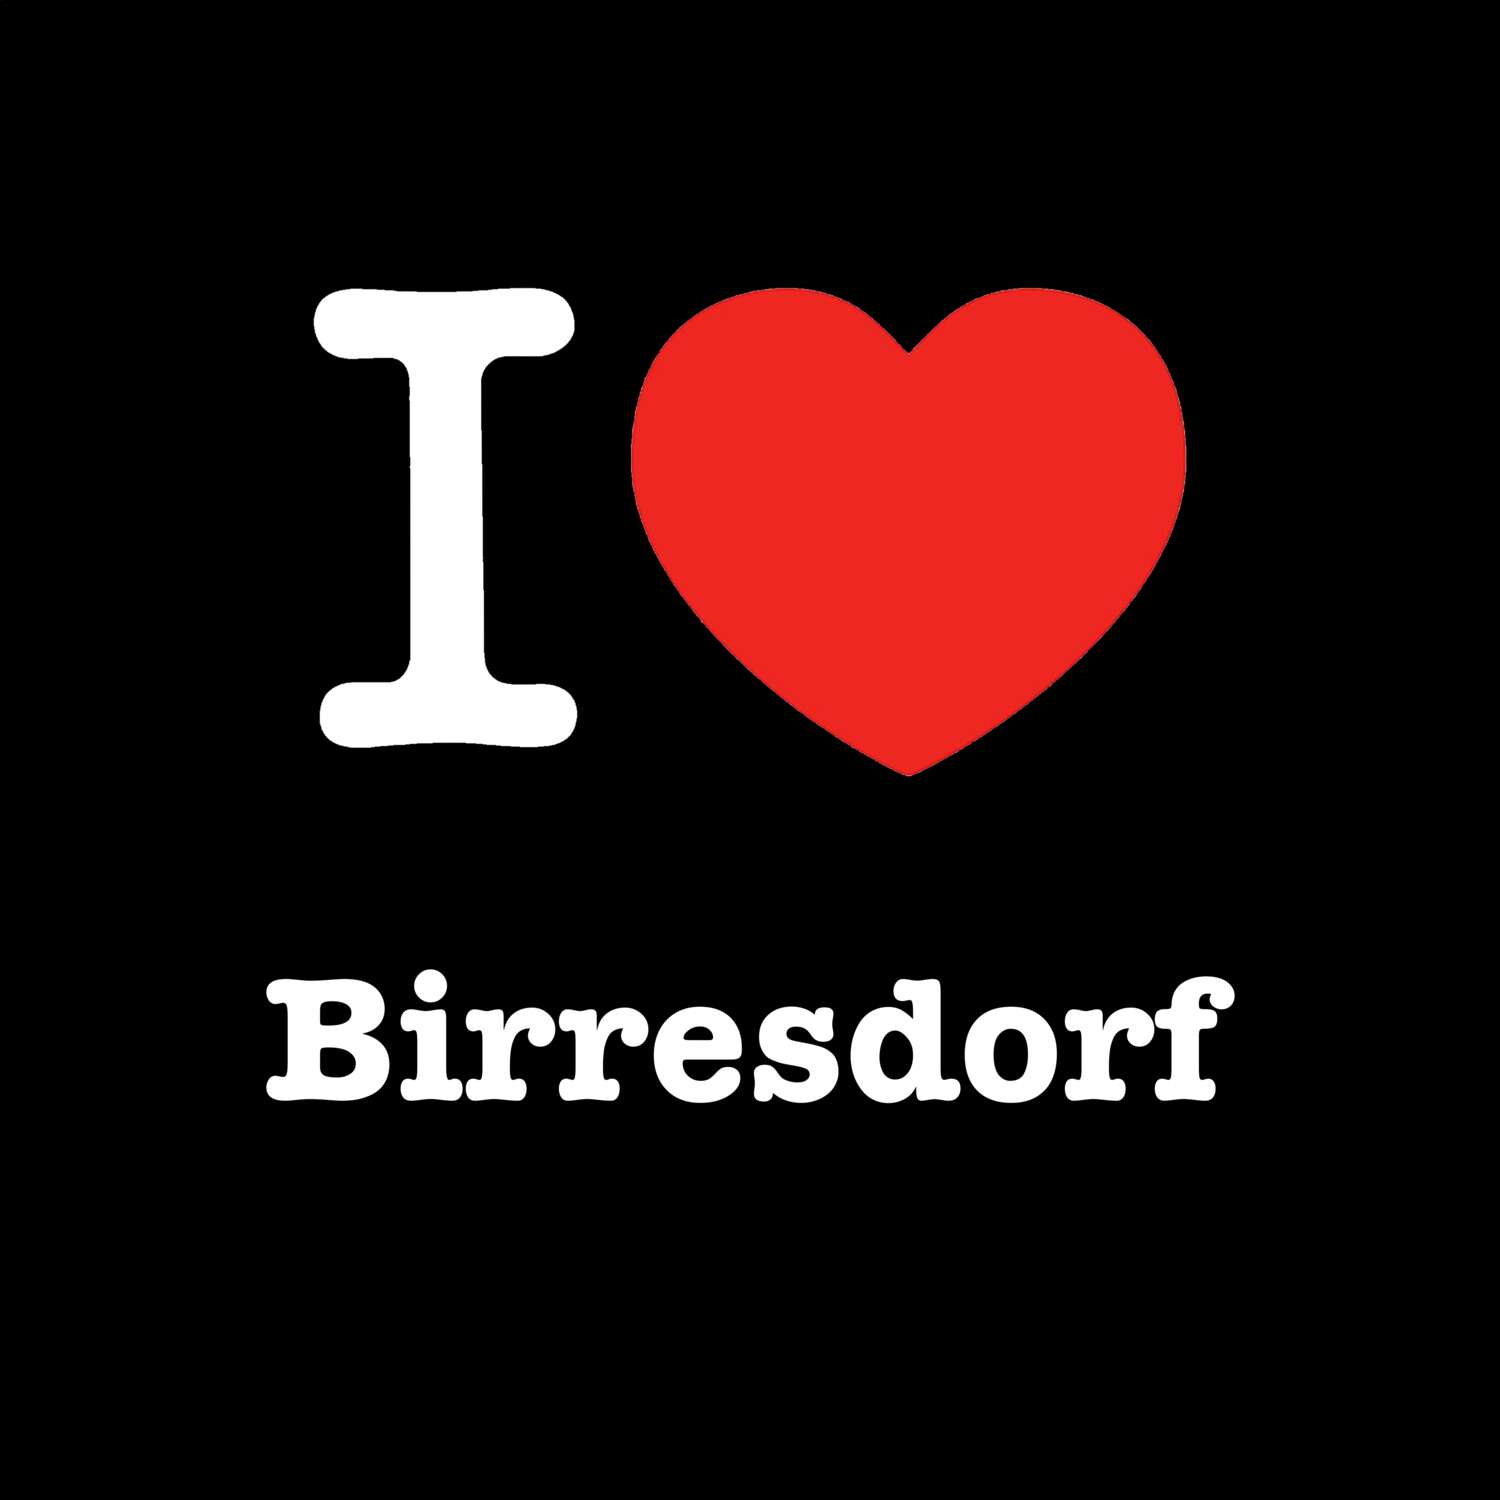 Birresdorf T-Shirt »I love«